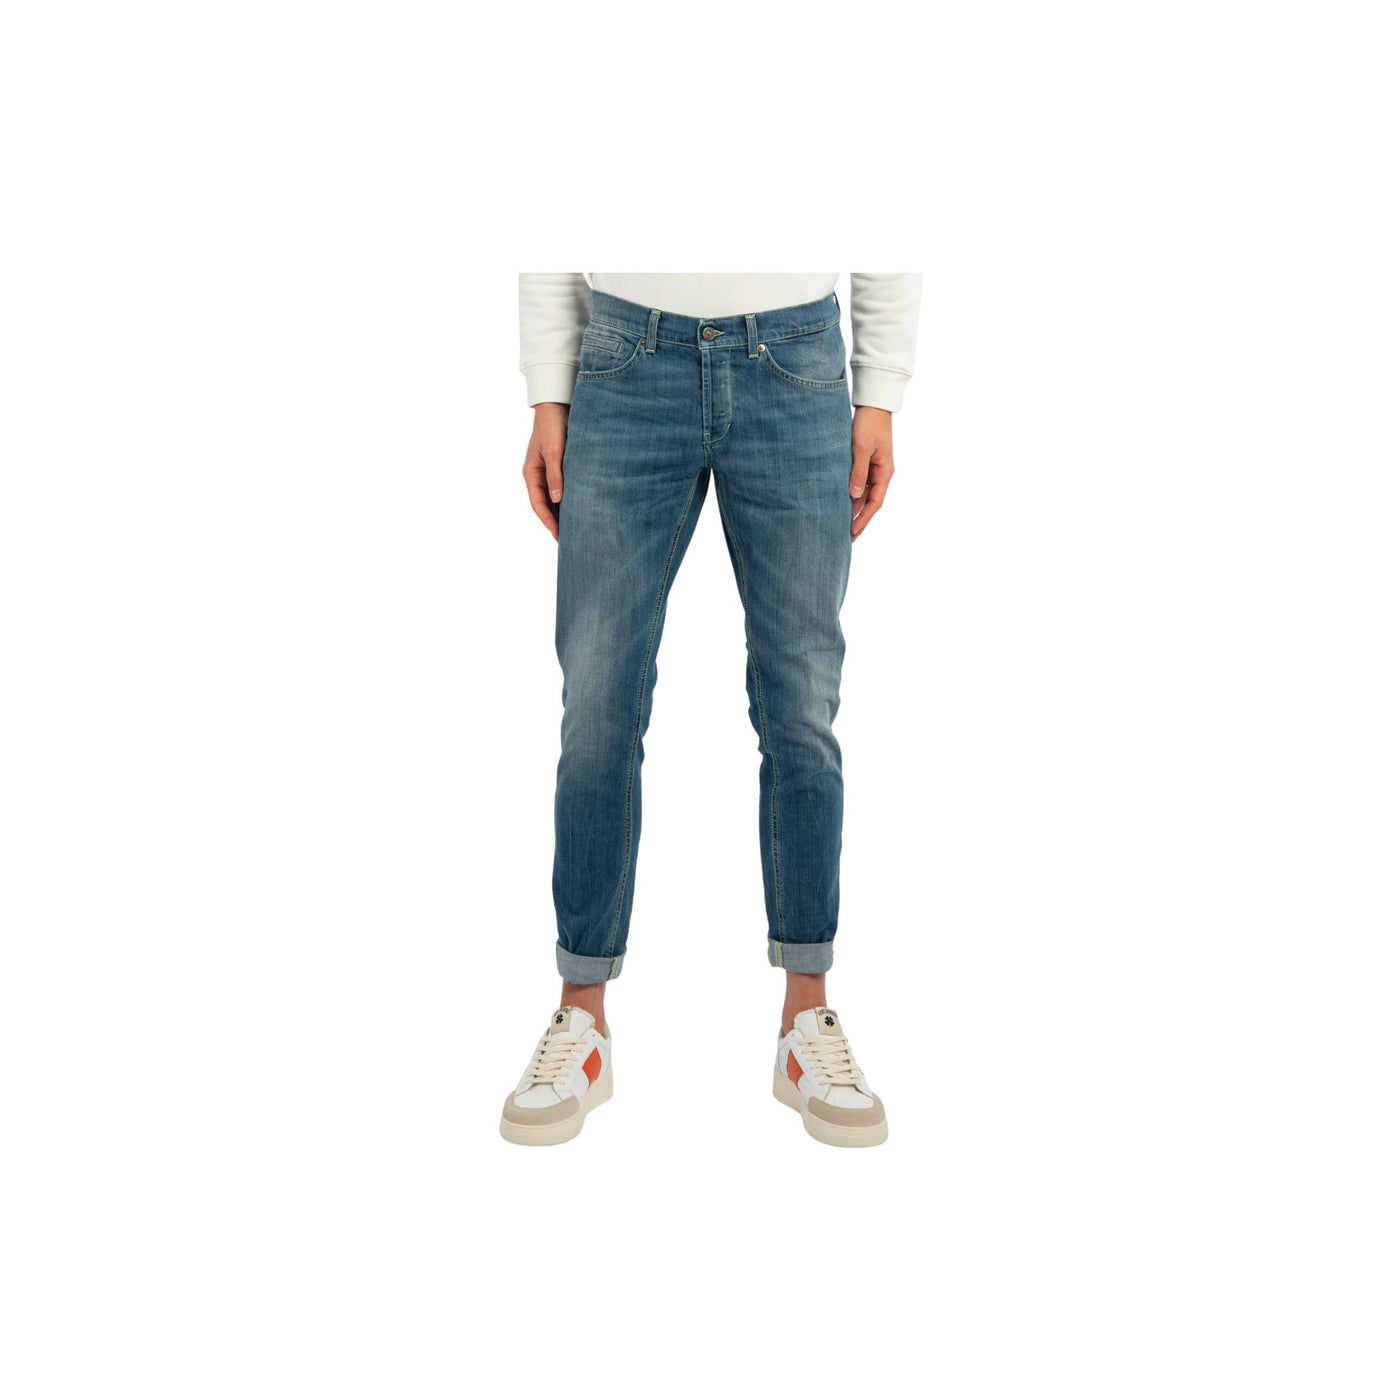 Men's medium jeans trousers